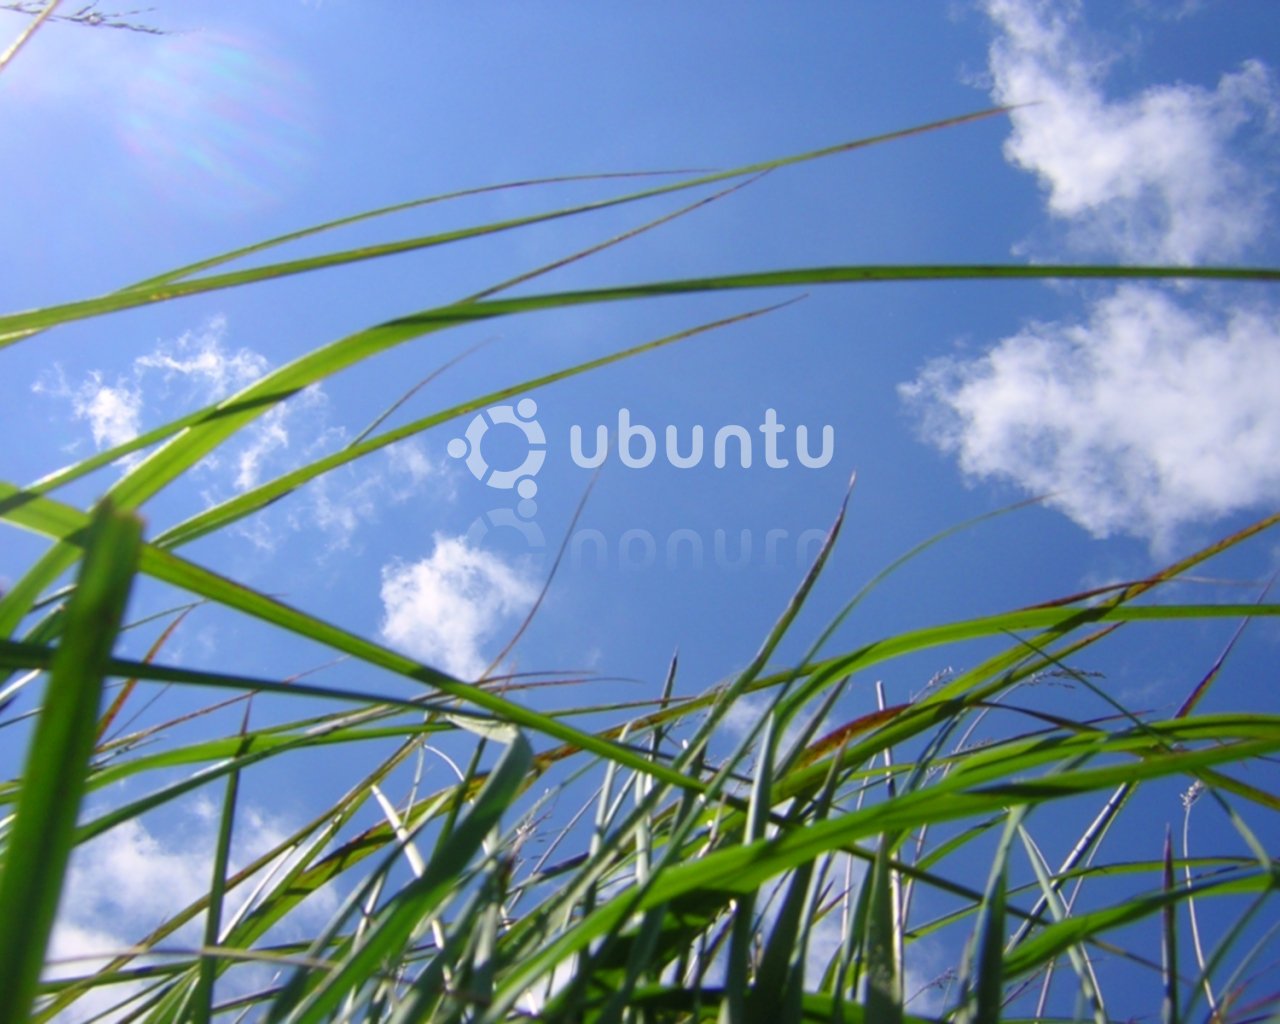 Fond d'ecran Ubuntu dans l'herbe